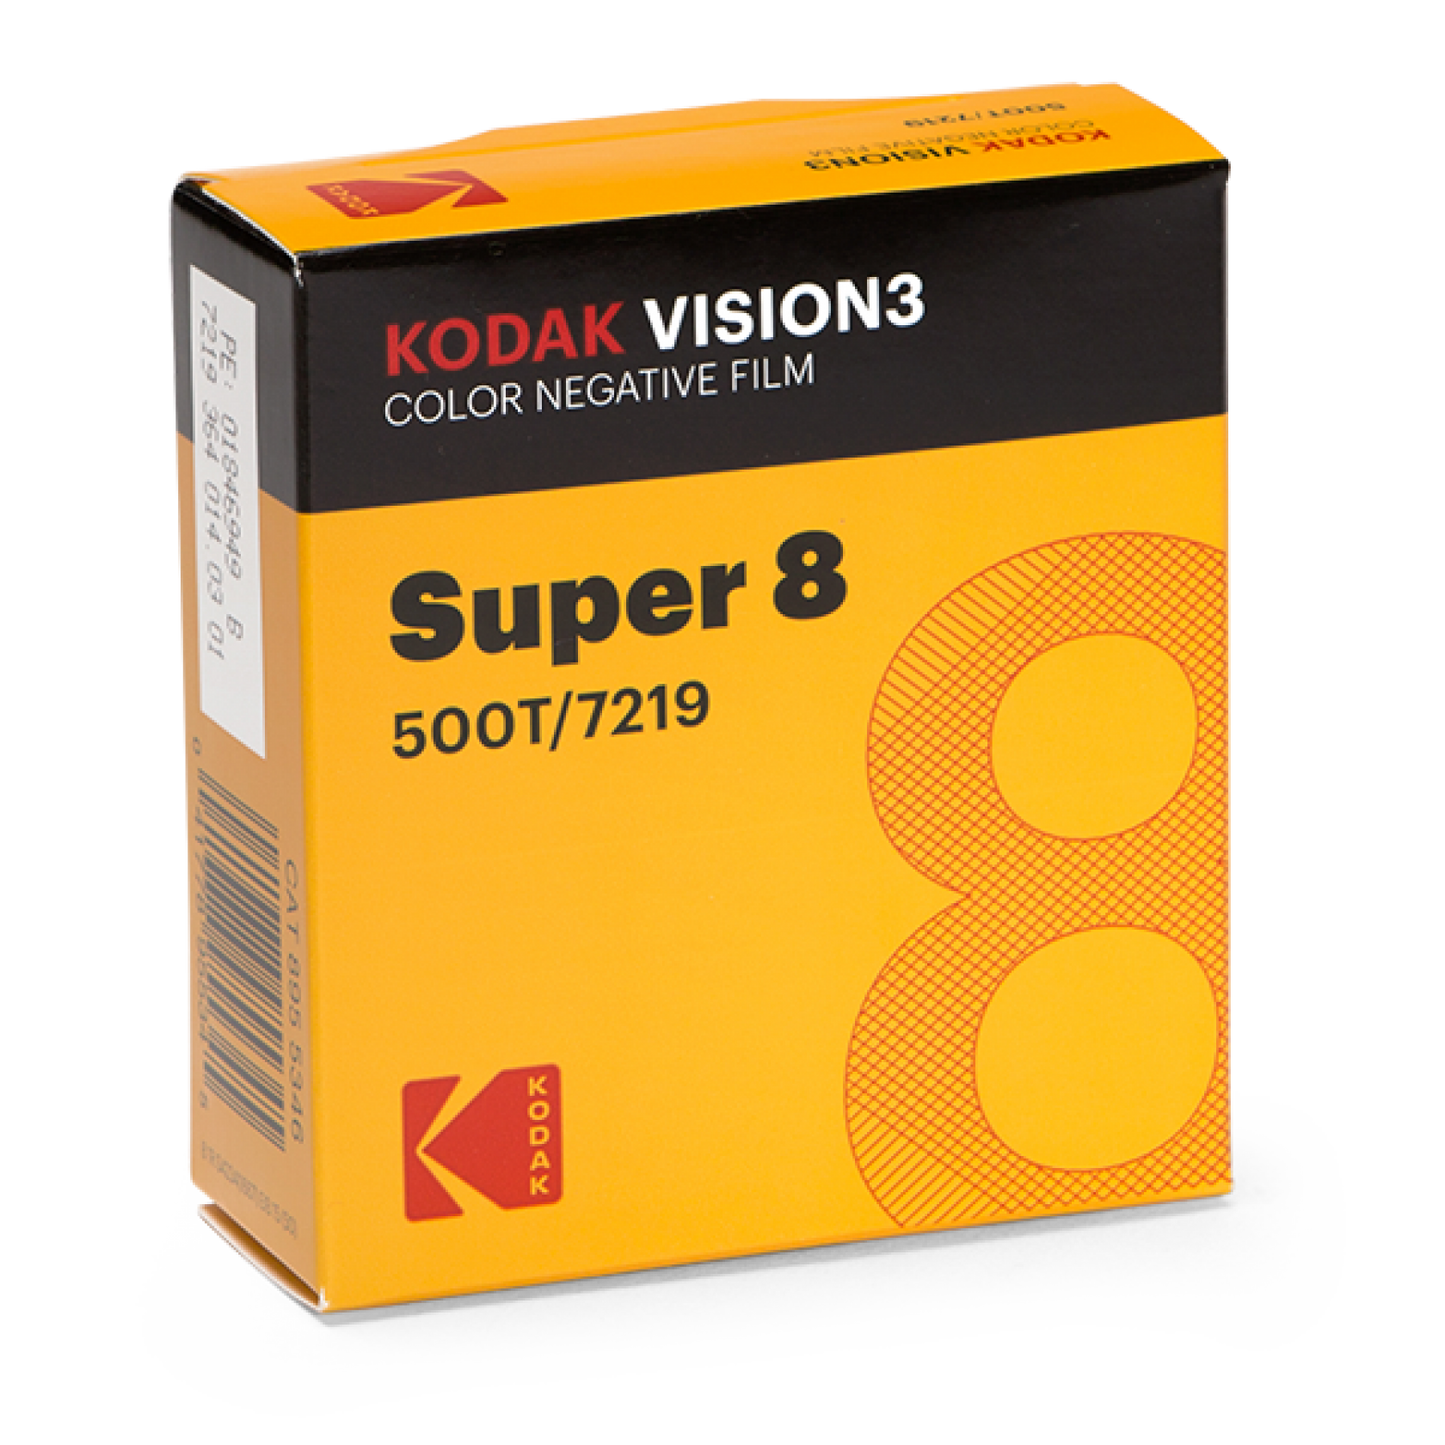 Film Kodak Vision3 super 8 - 500T/7219